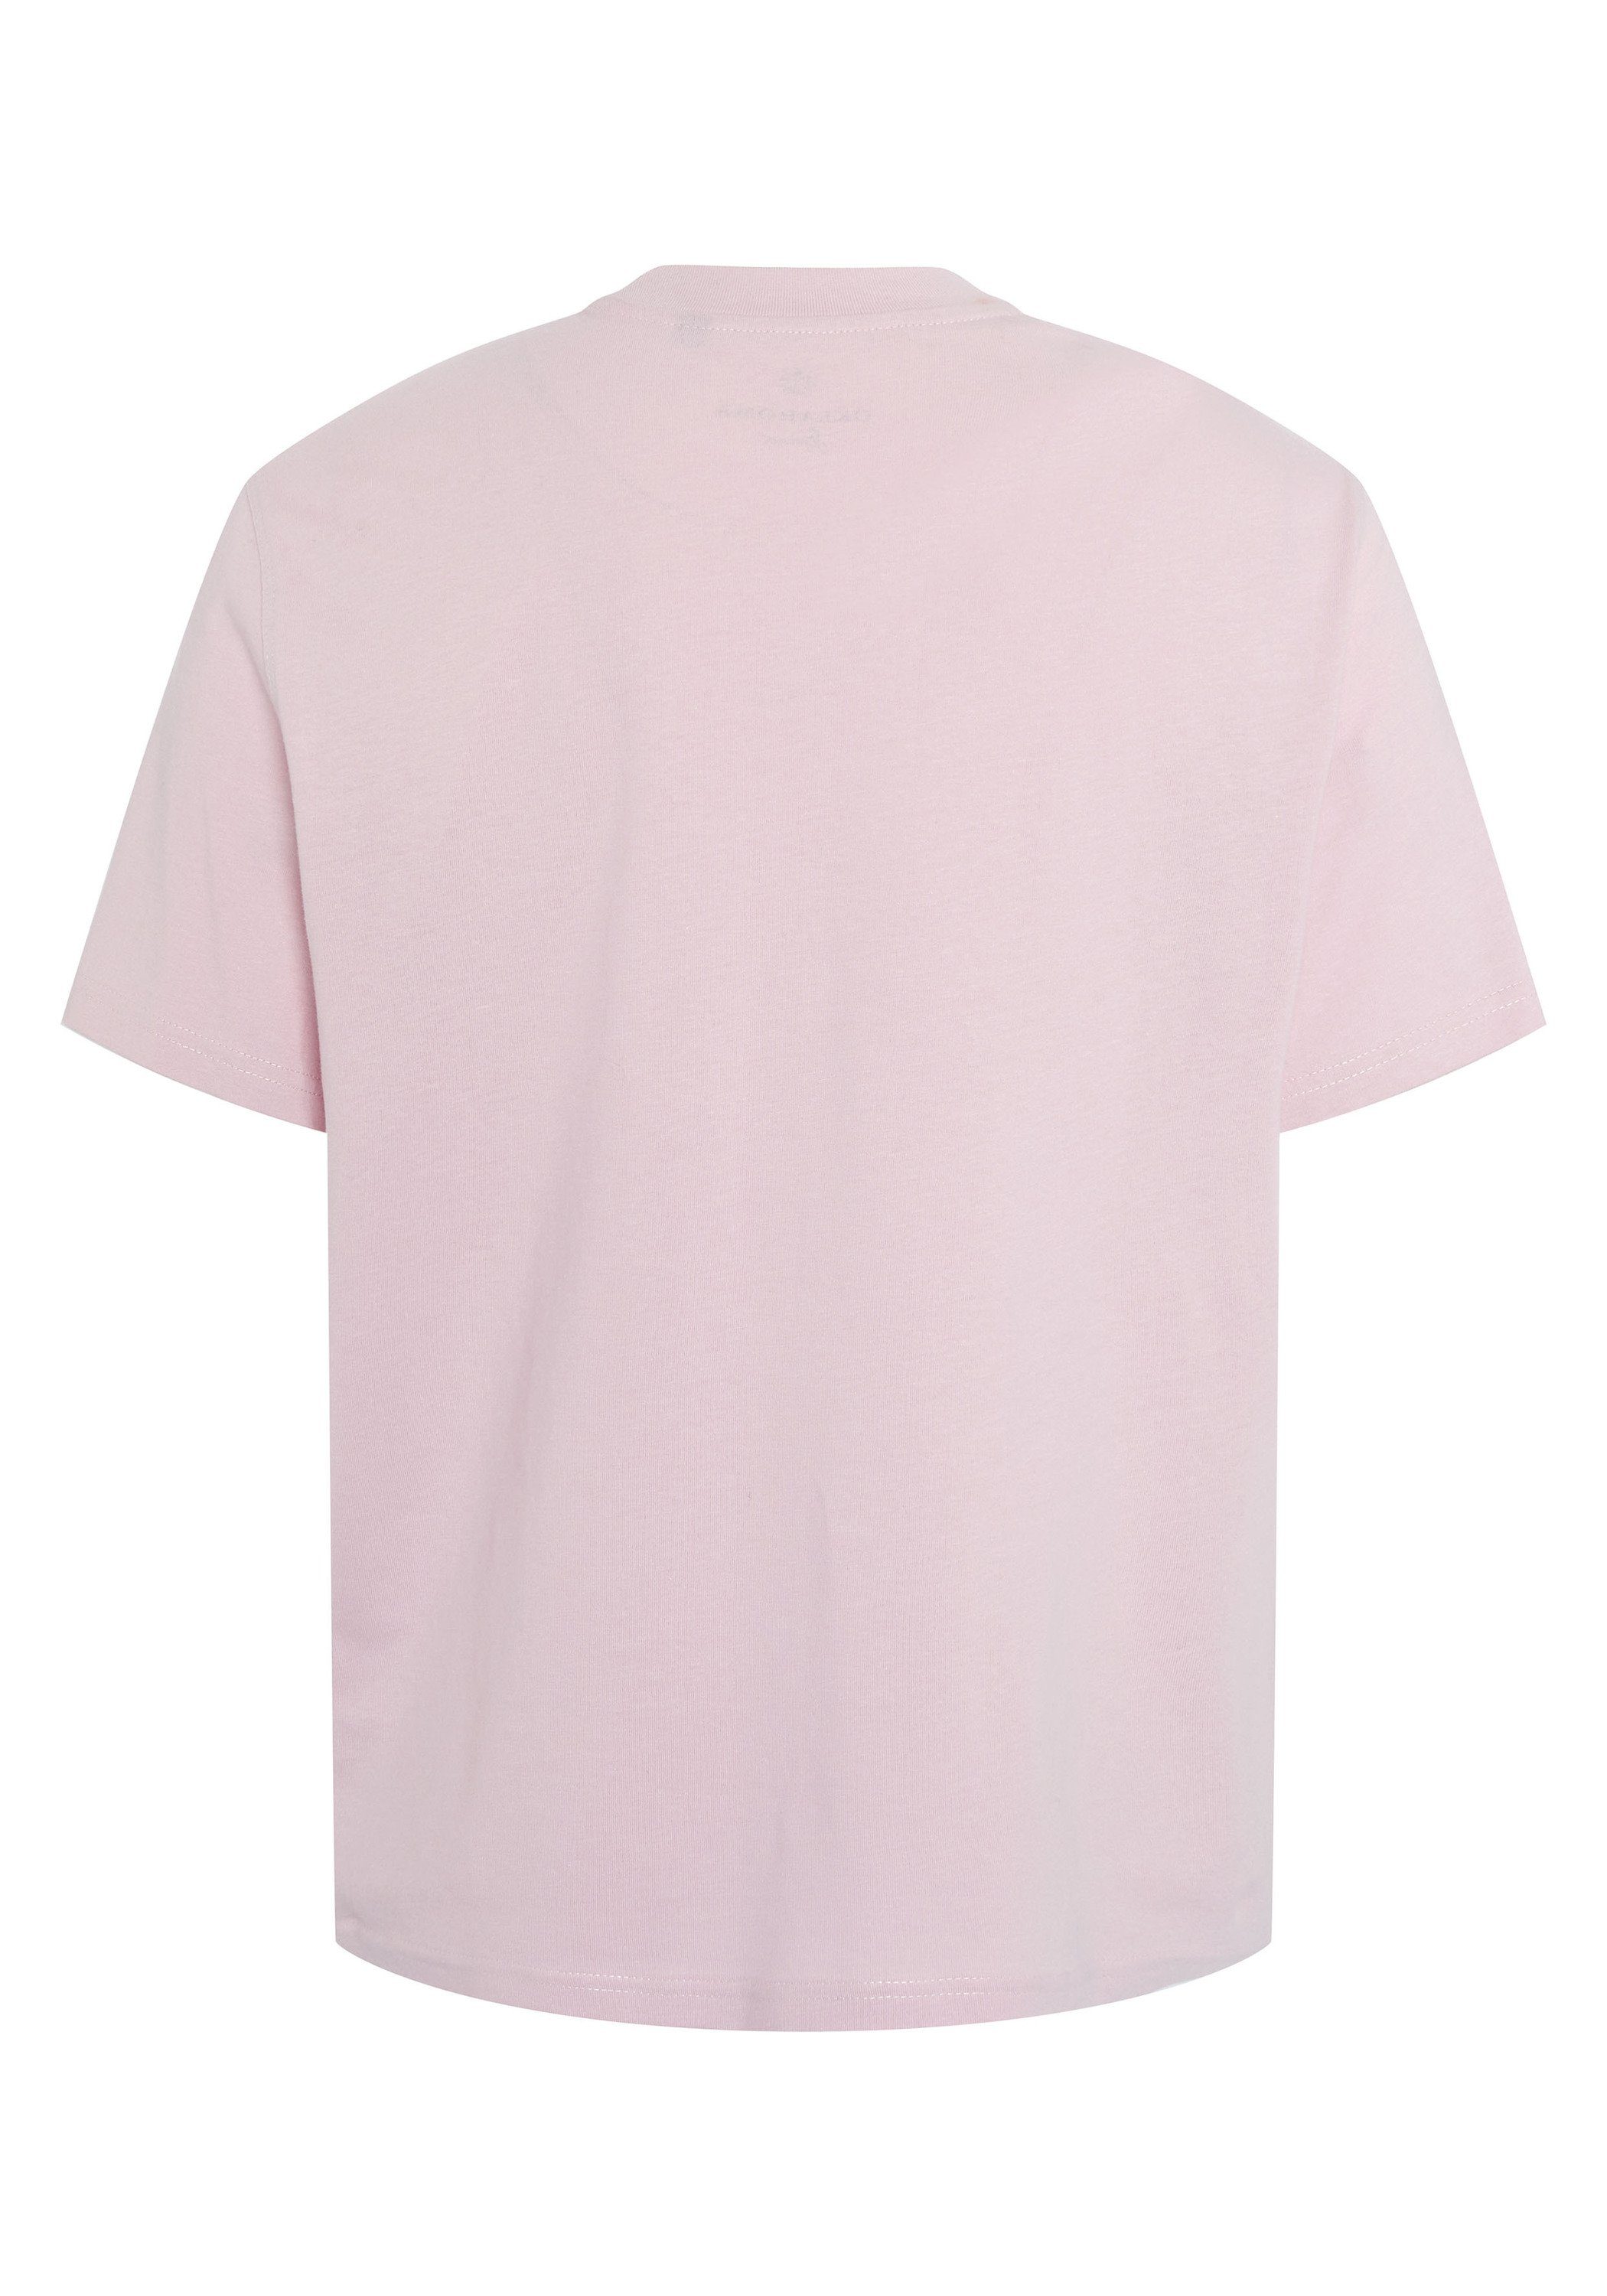 Oklahoma Jeans Desert-Motiv Nectar 14-2305 Print-Shirt Pink mit